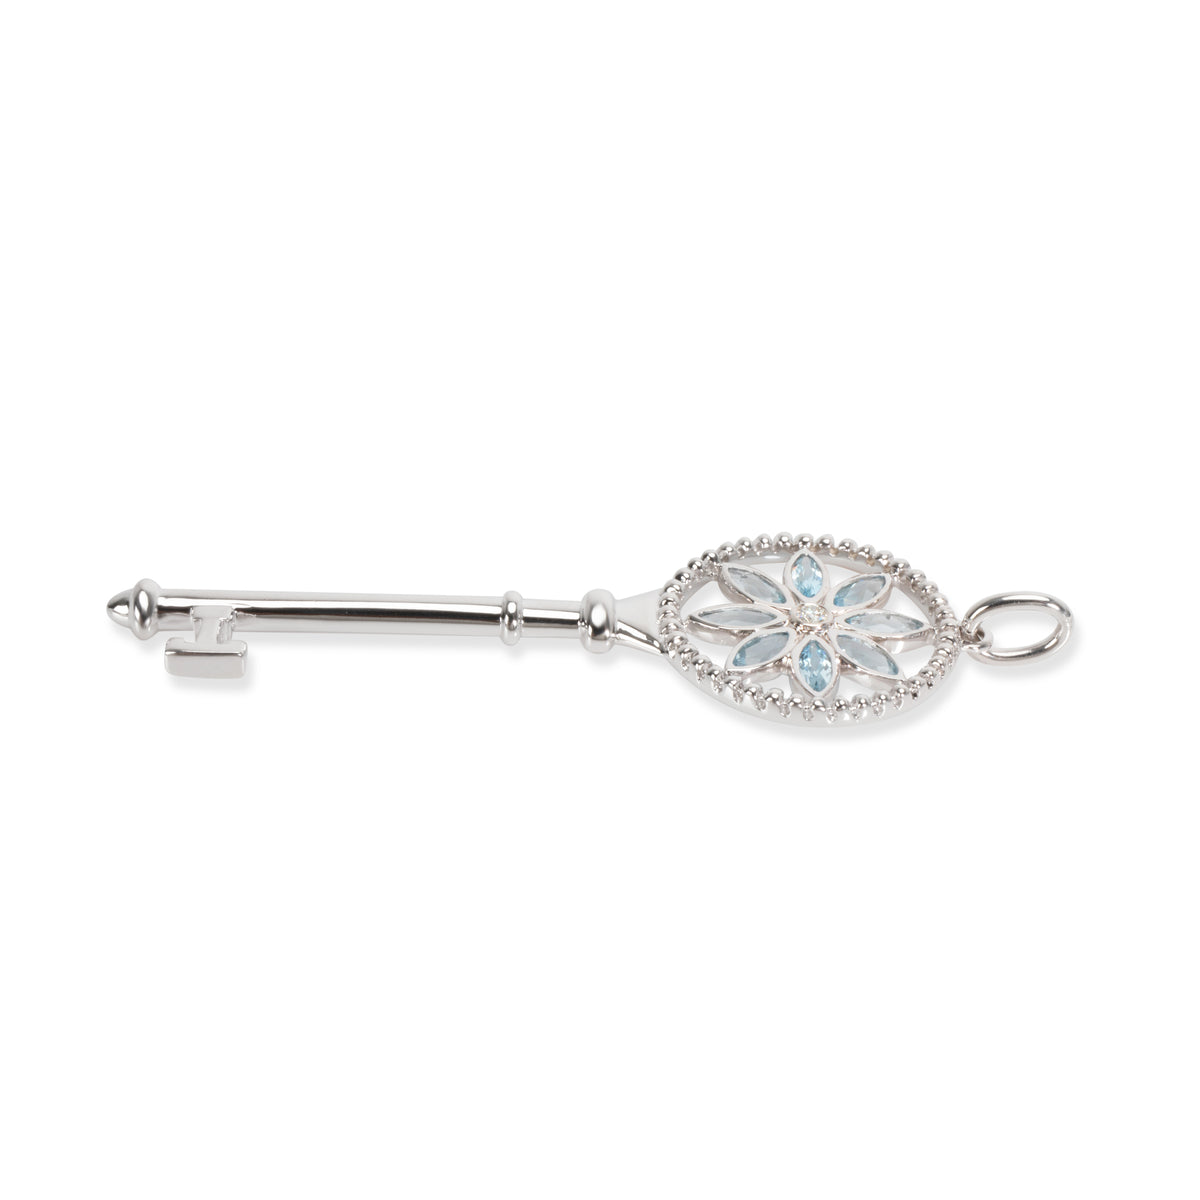 Tiffany & Co. Daisy Key Pendant with Aquamarine in 18K White Gold